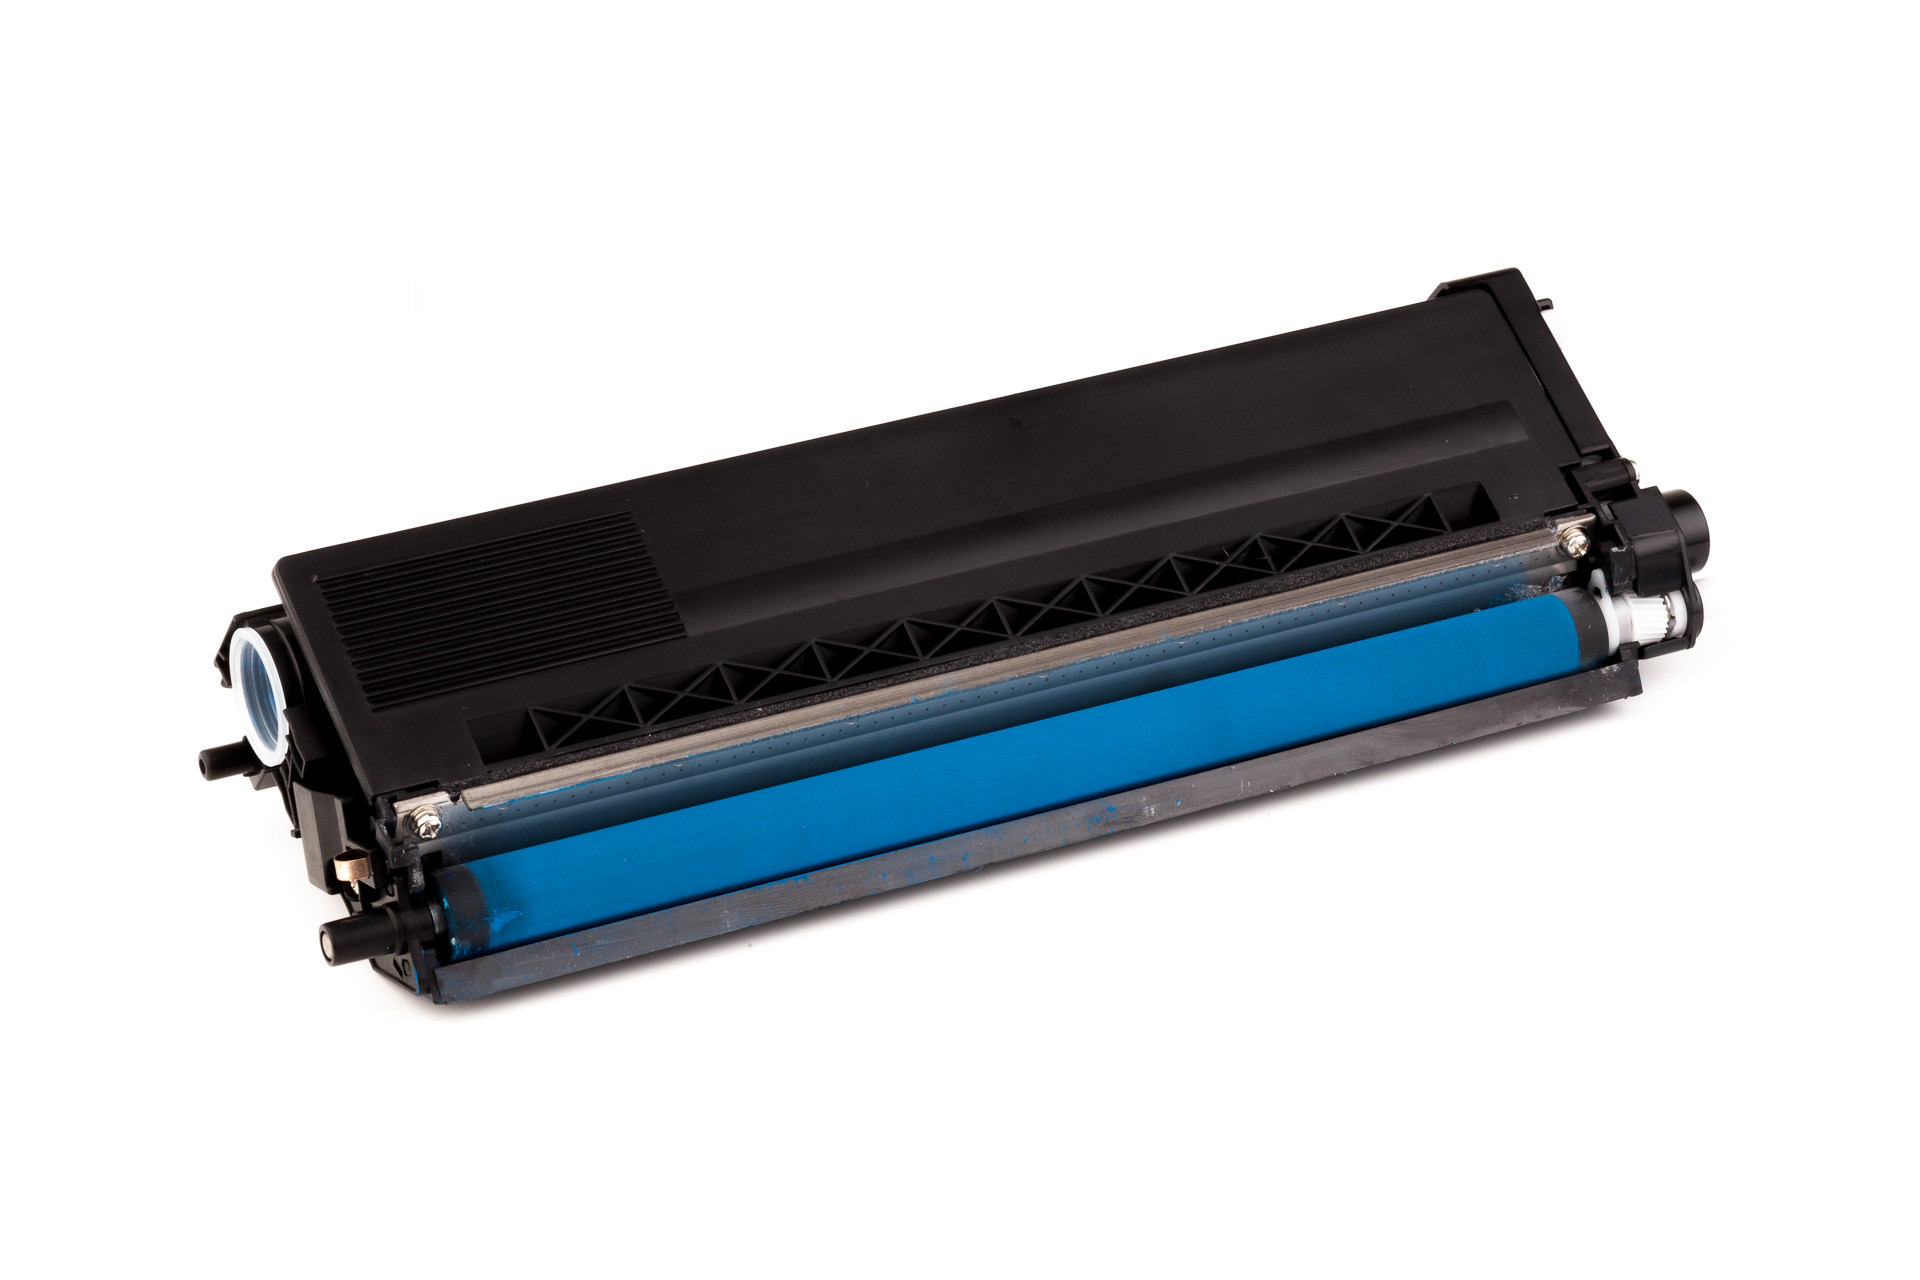 Toner cartridge (alternative) compatible with Brother HL 4140 CN / 4150 CDN / 4570 CDW / 4570 Cdwt / MFC 9460 CDN / 9560 / 9465 CDN / 9970 CDW / DCP 9055 CDN / 9270 CDN // TN 325 C / TN325C cyan